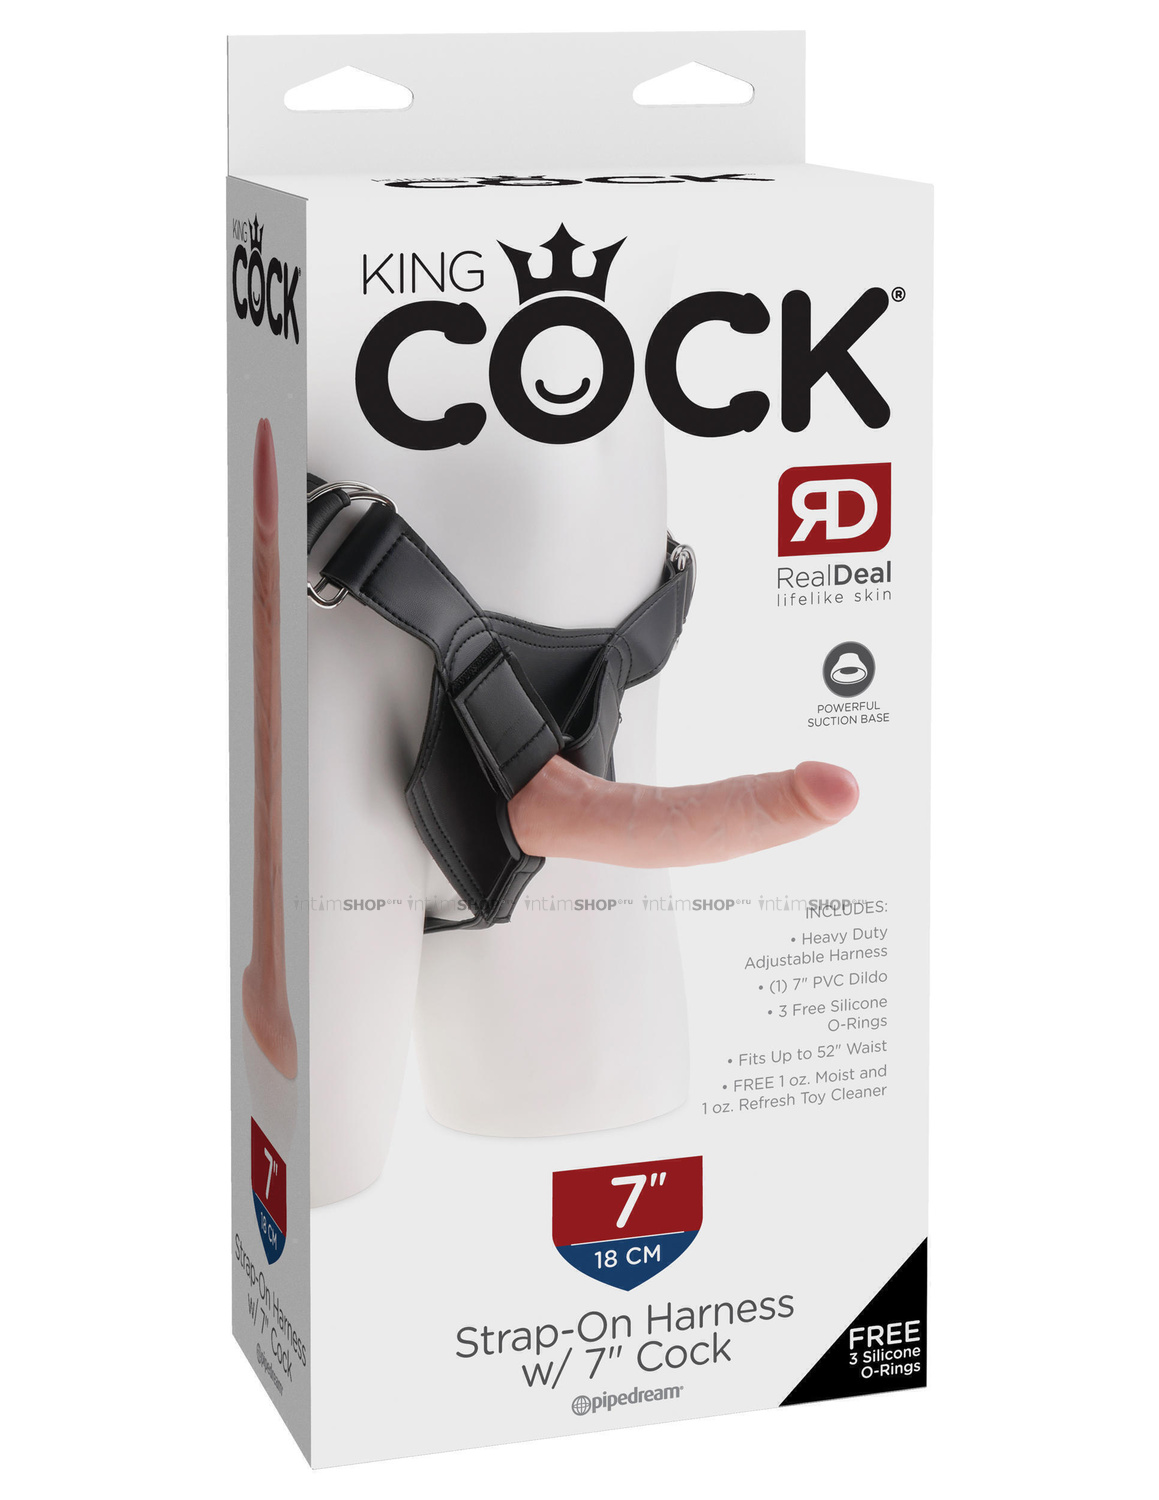 Страпон со съемной насадкой на ремнях Pipedream King Cock Strap-On Harness 7" Cock, телесный